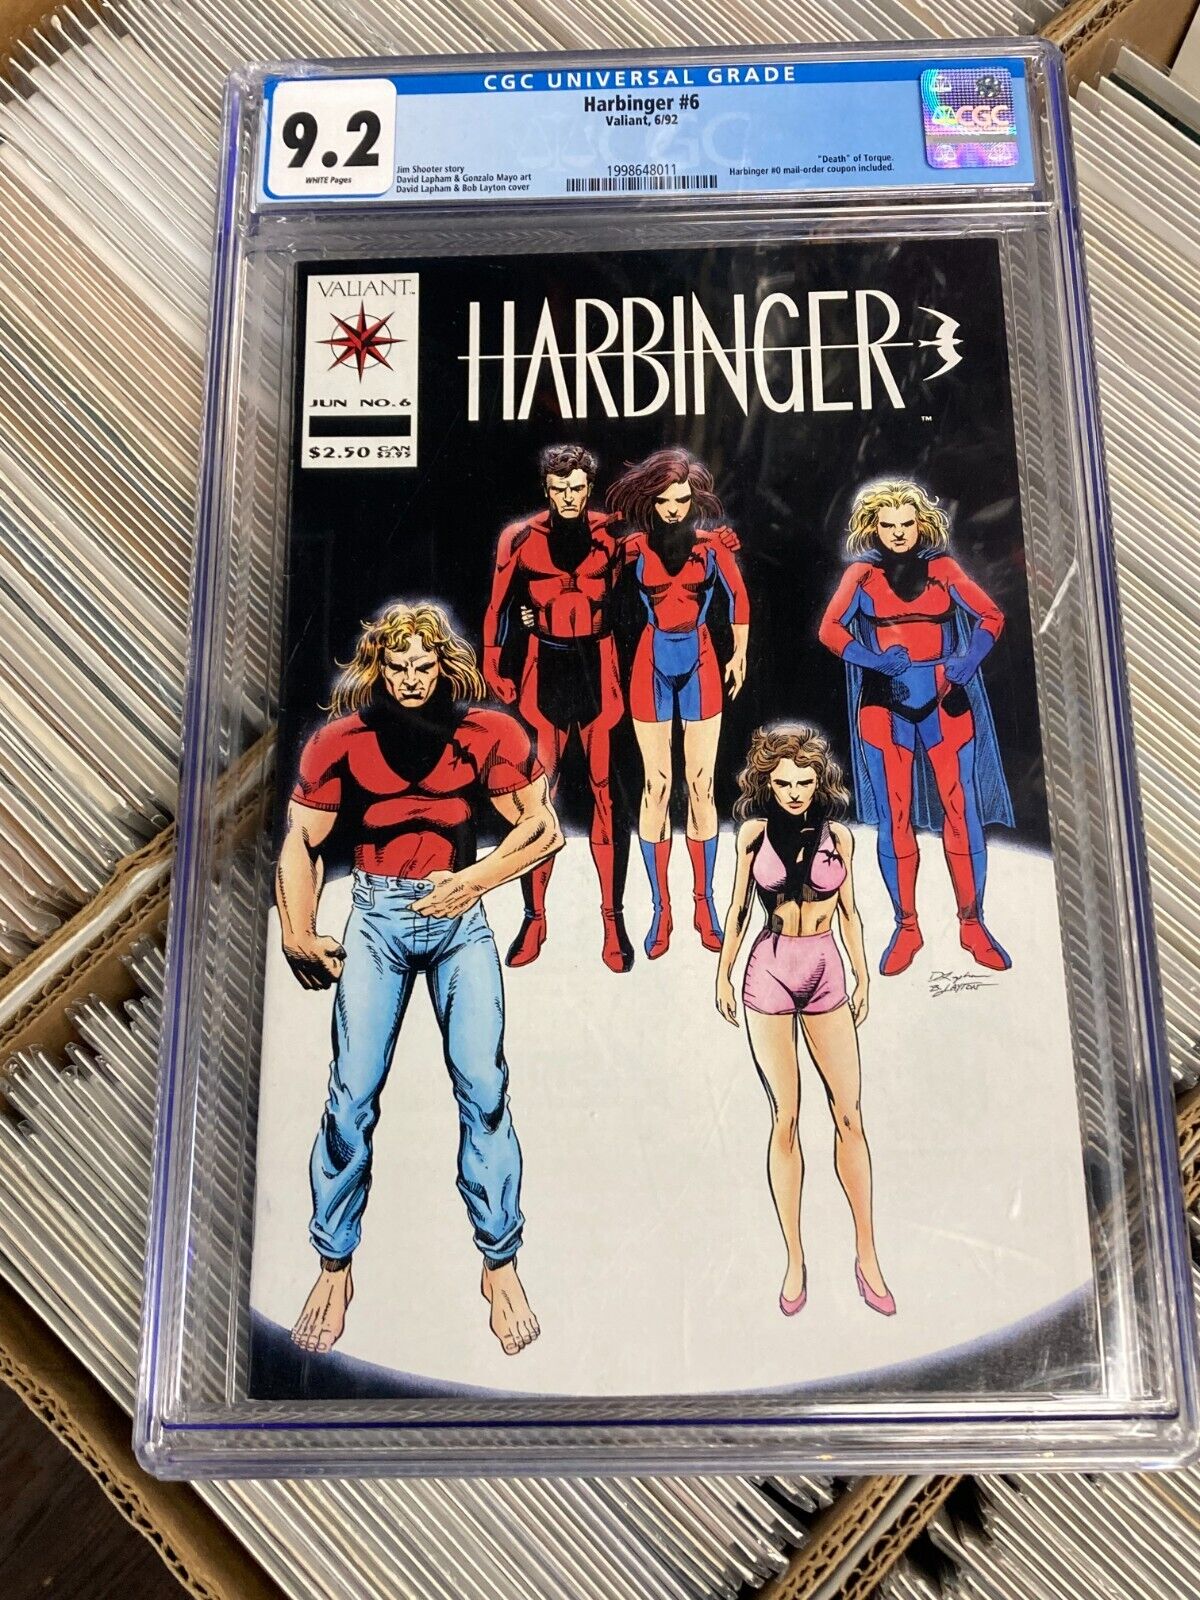 Harbinger #6 Valiant Comics 1992 CGC 9.2 Damaged case